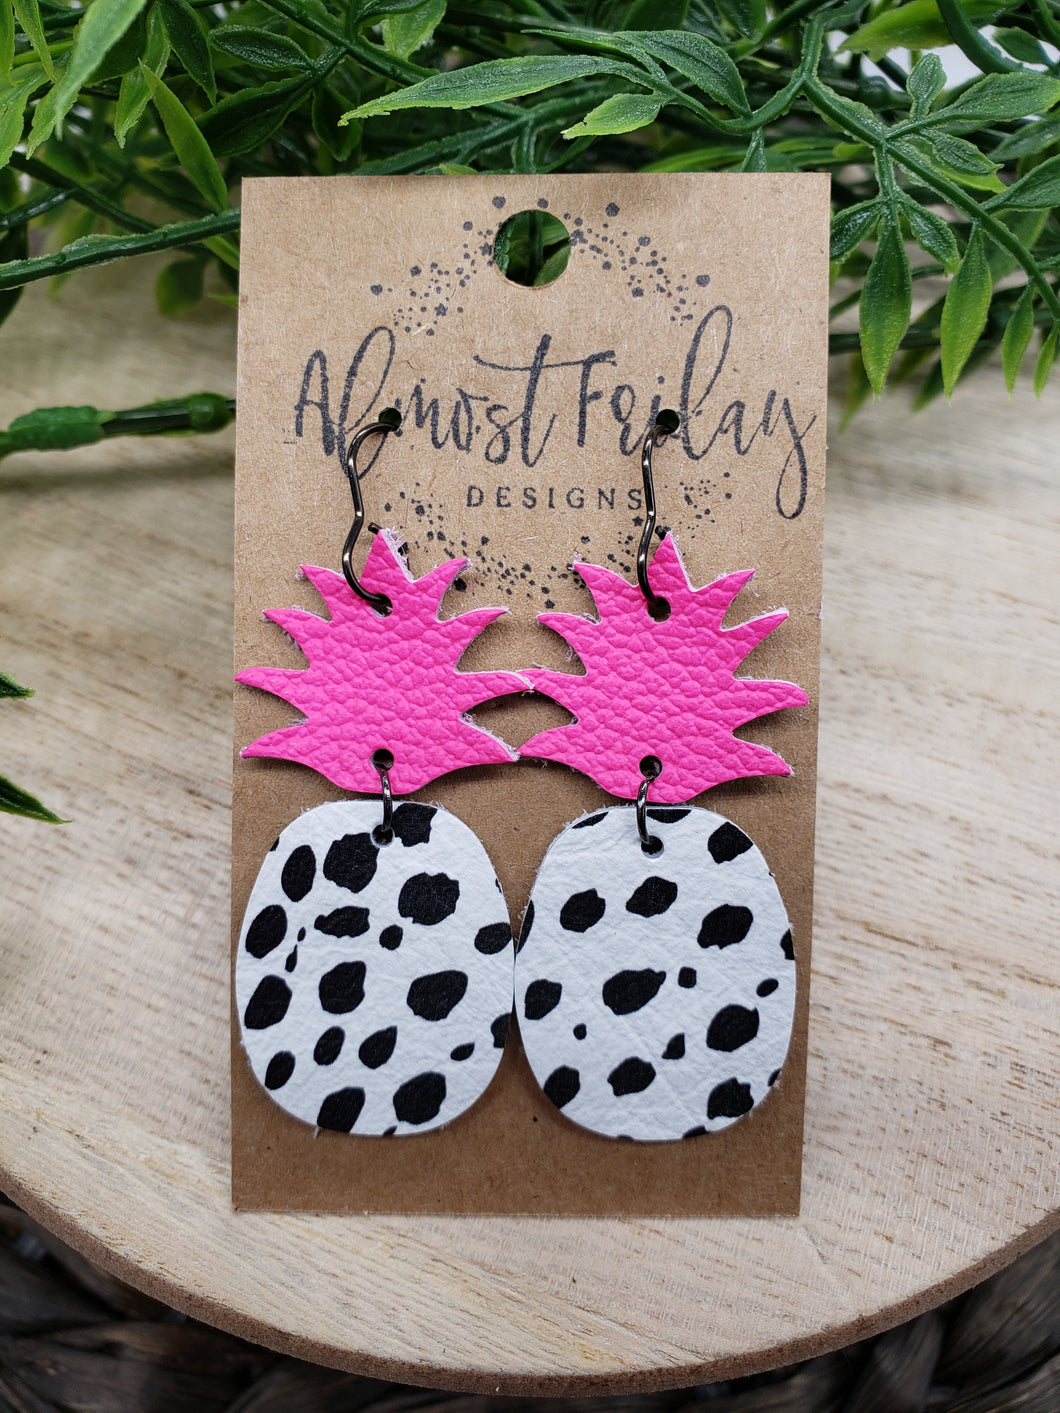 Genuine Leather Earrings - Pineapple Earrings - Dalmatian Spots - Colorful - Black - Hot Pink - Animal Print - White - Summer Earrings - Statement Earrings